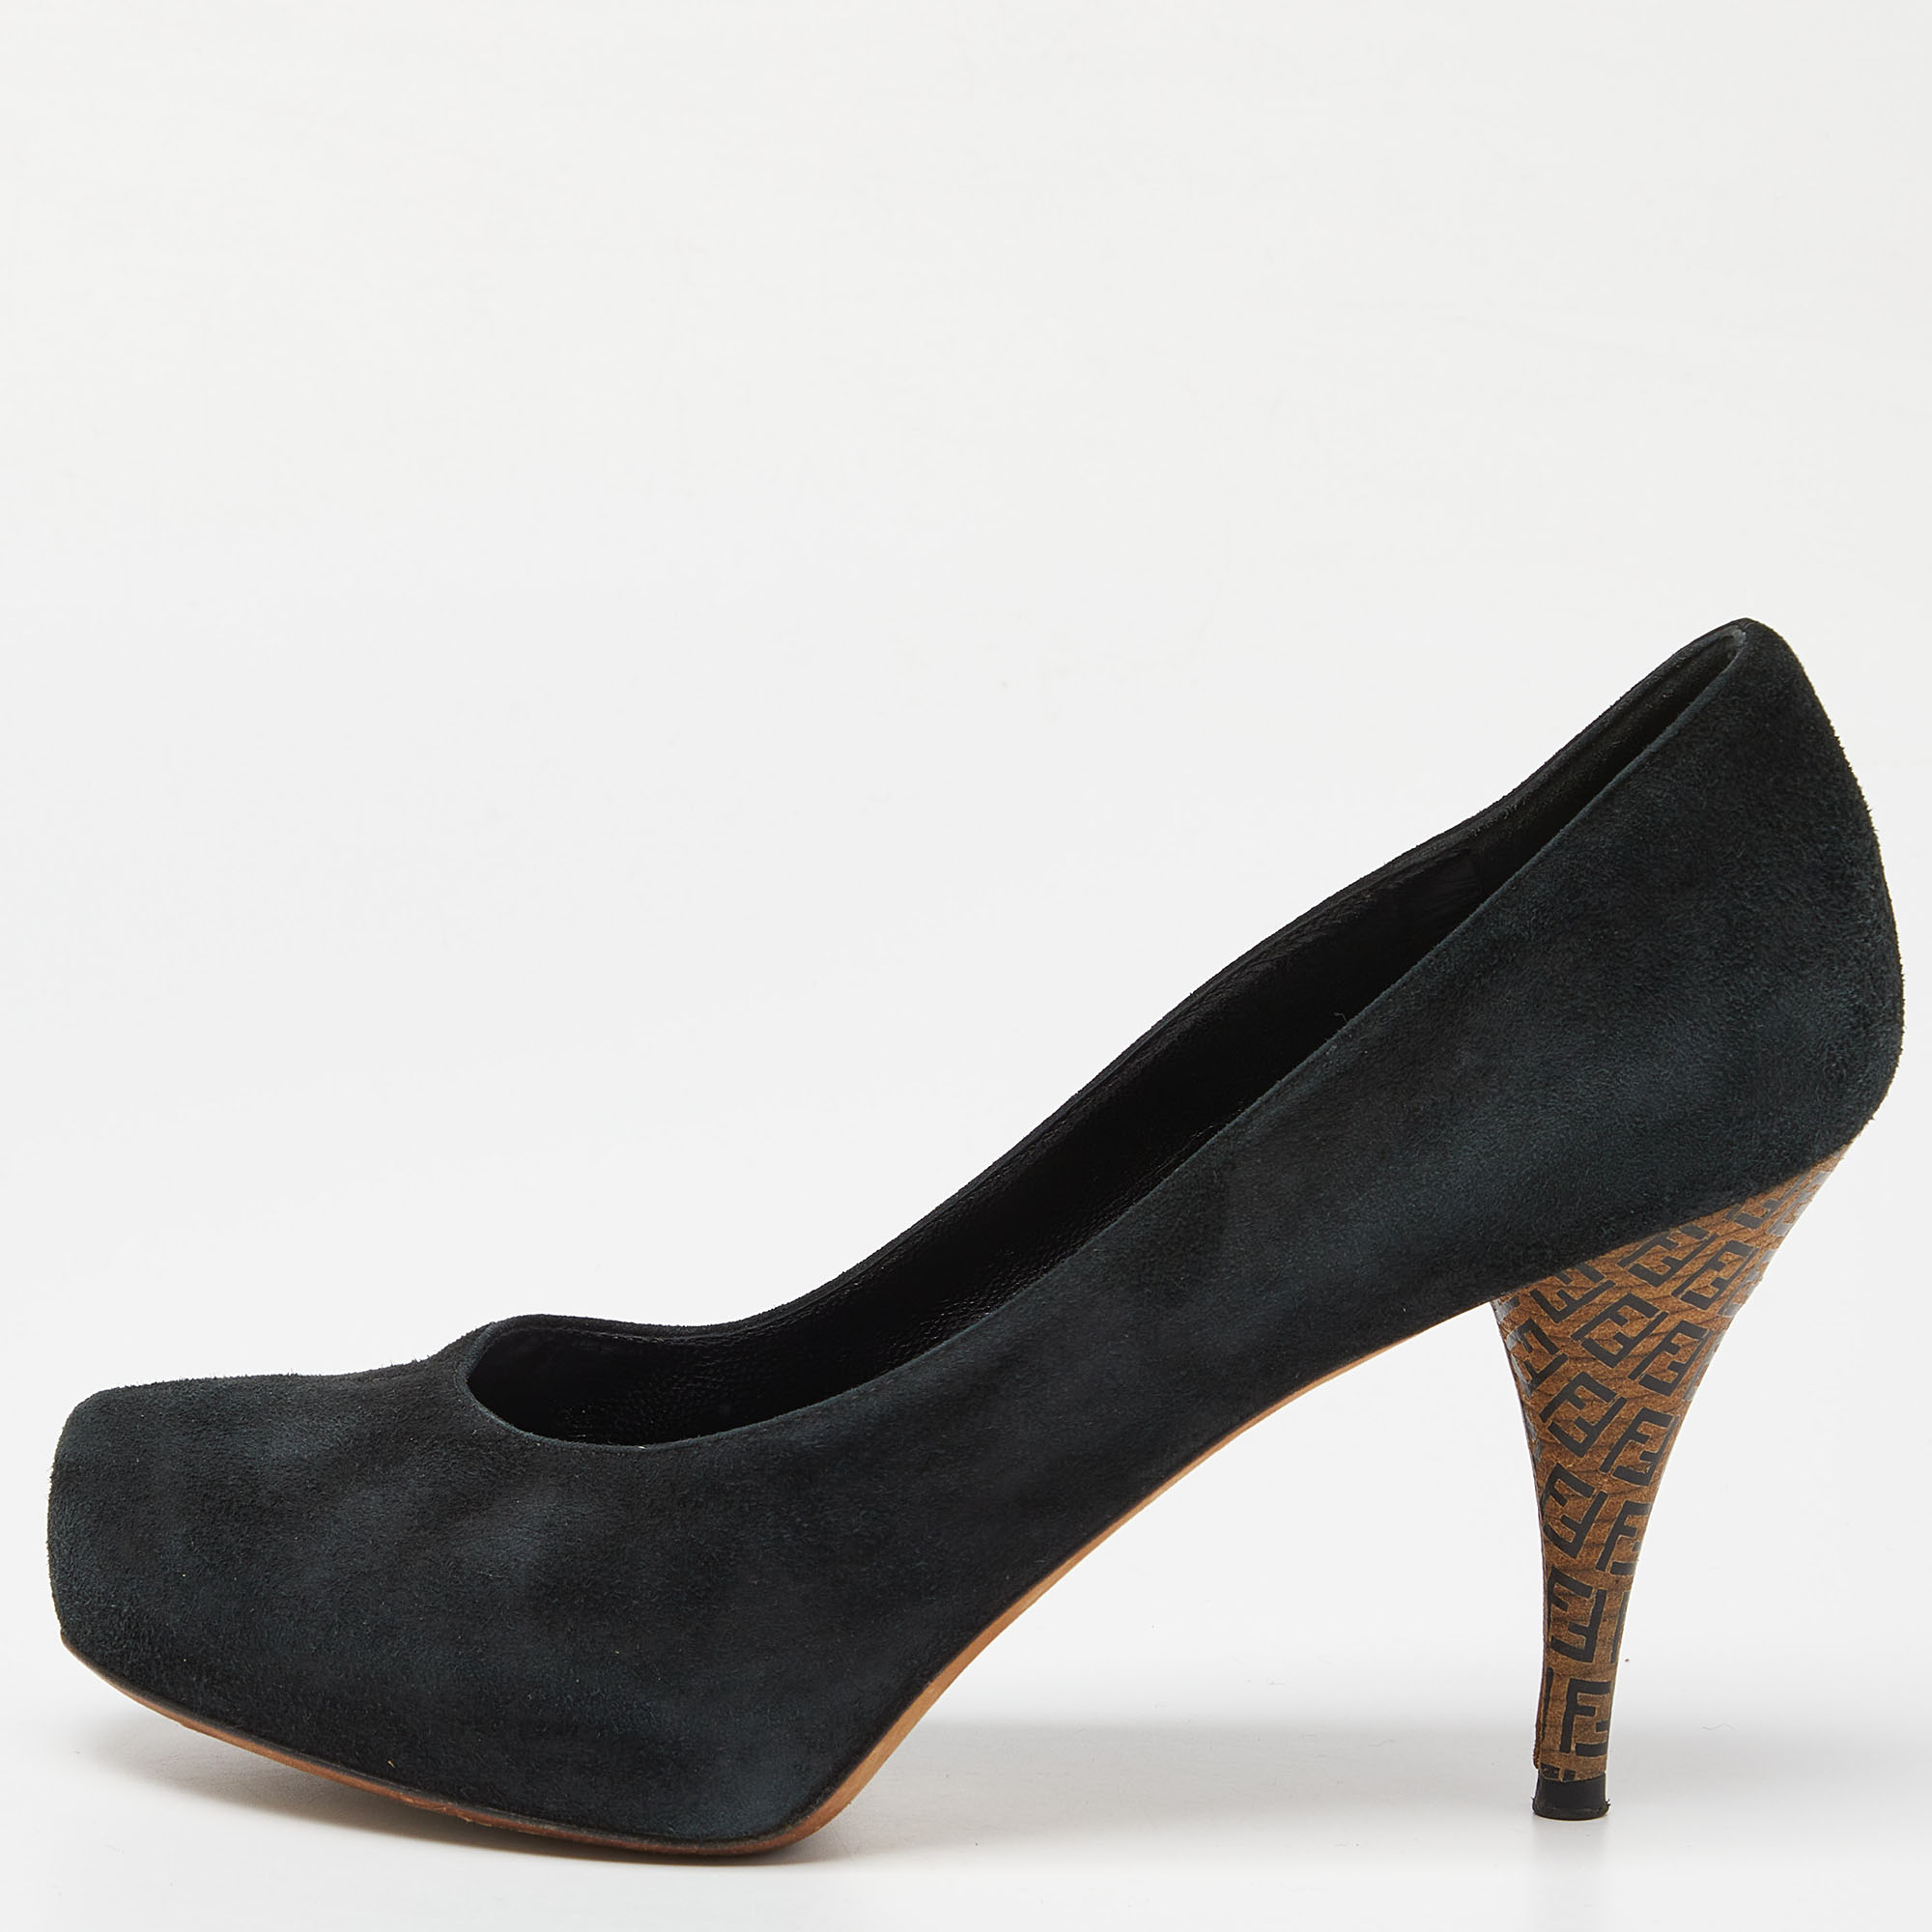 Fendi black suede zucca heel pumps size 37